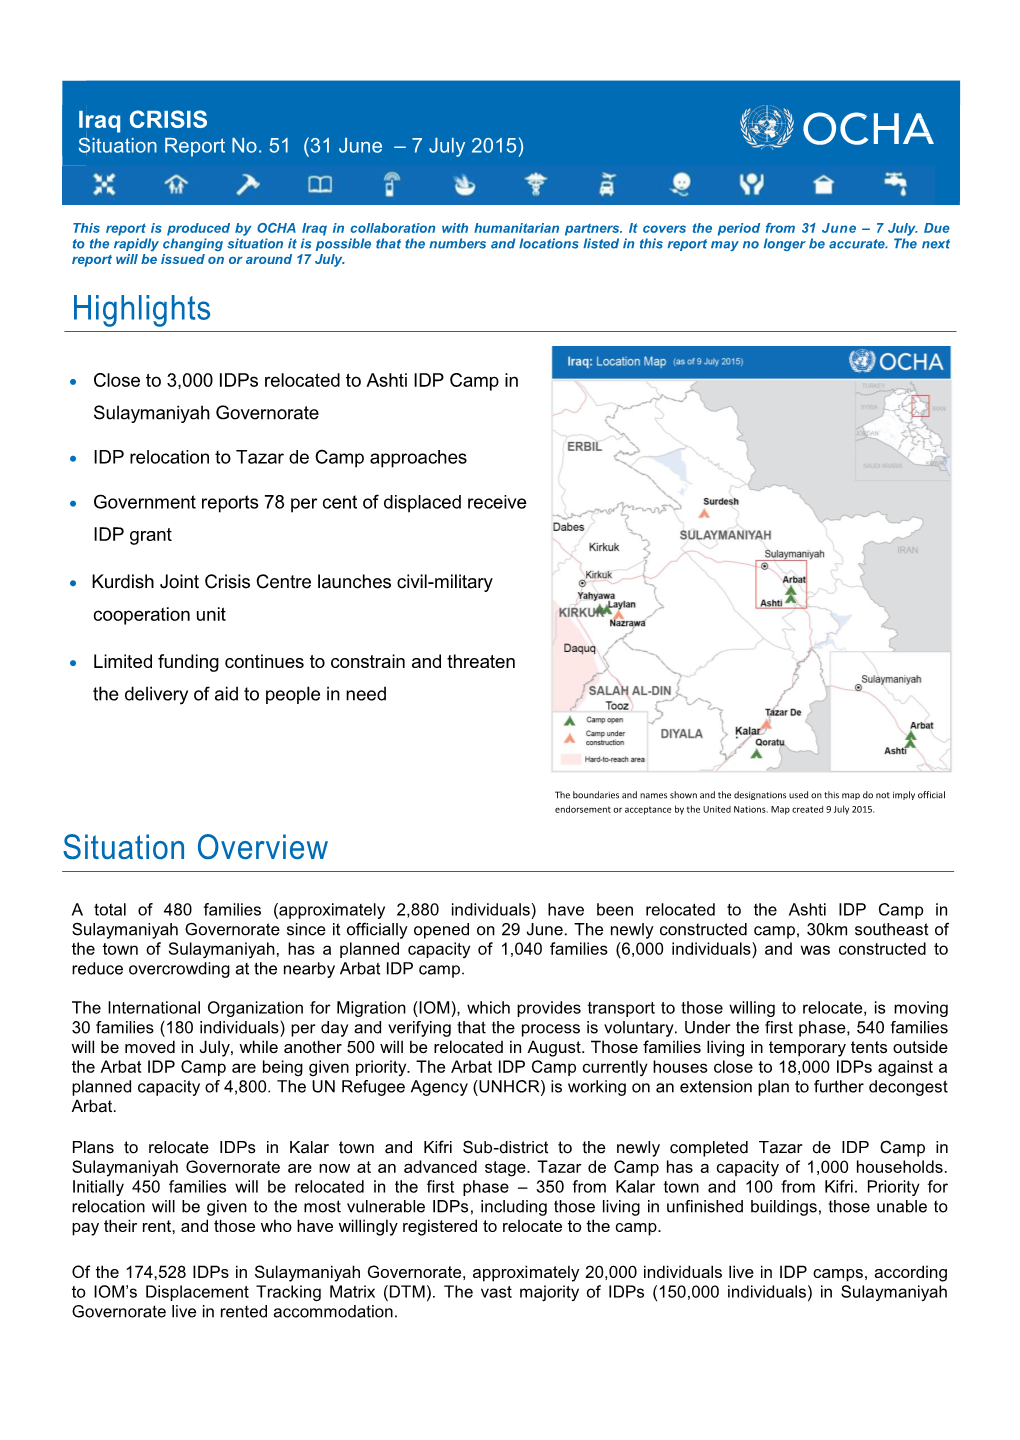 Iraq Crisis Situation Report No.51 31 June - 7 July 2015 0.Pdf (English)